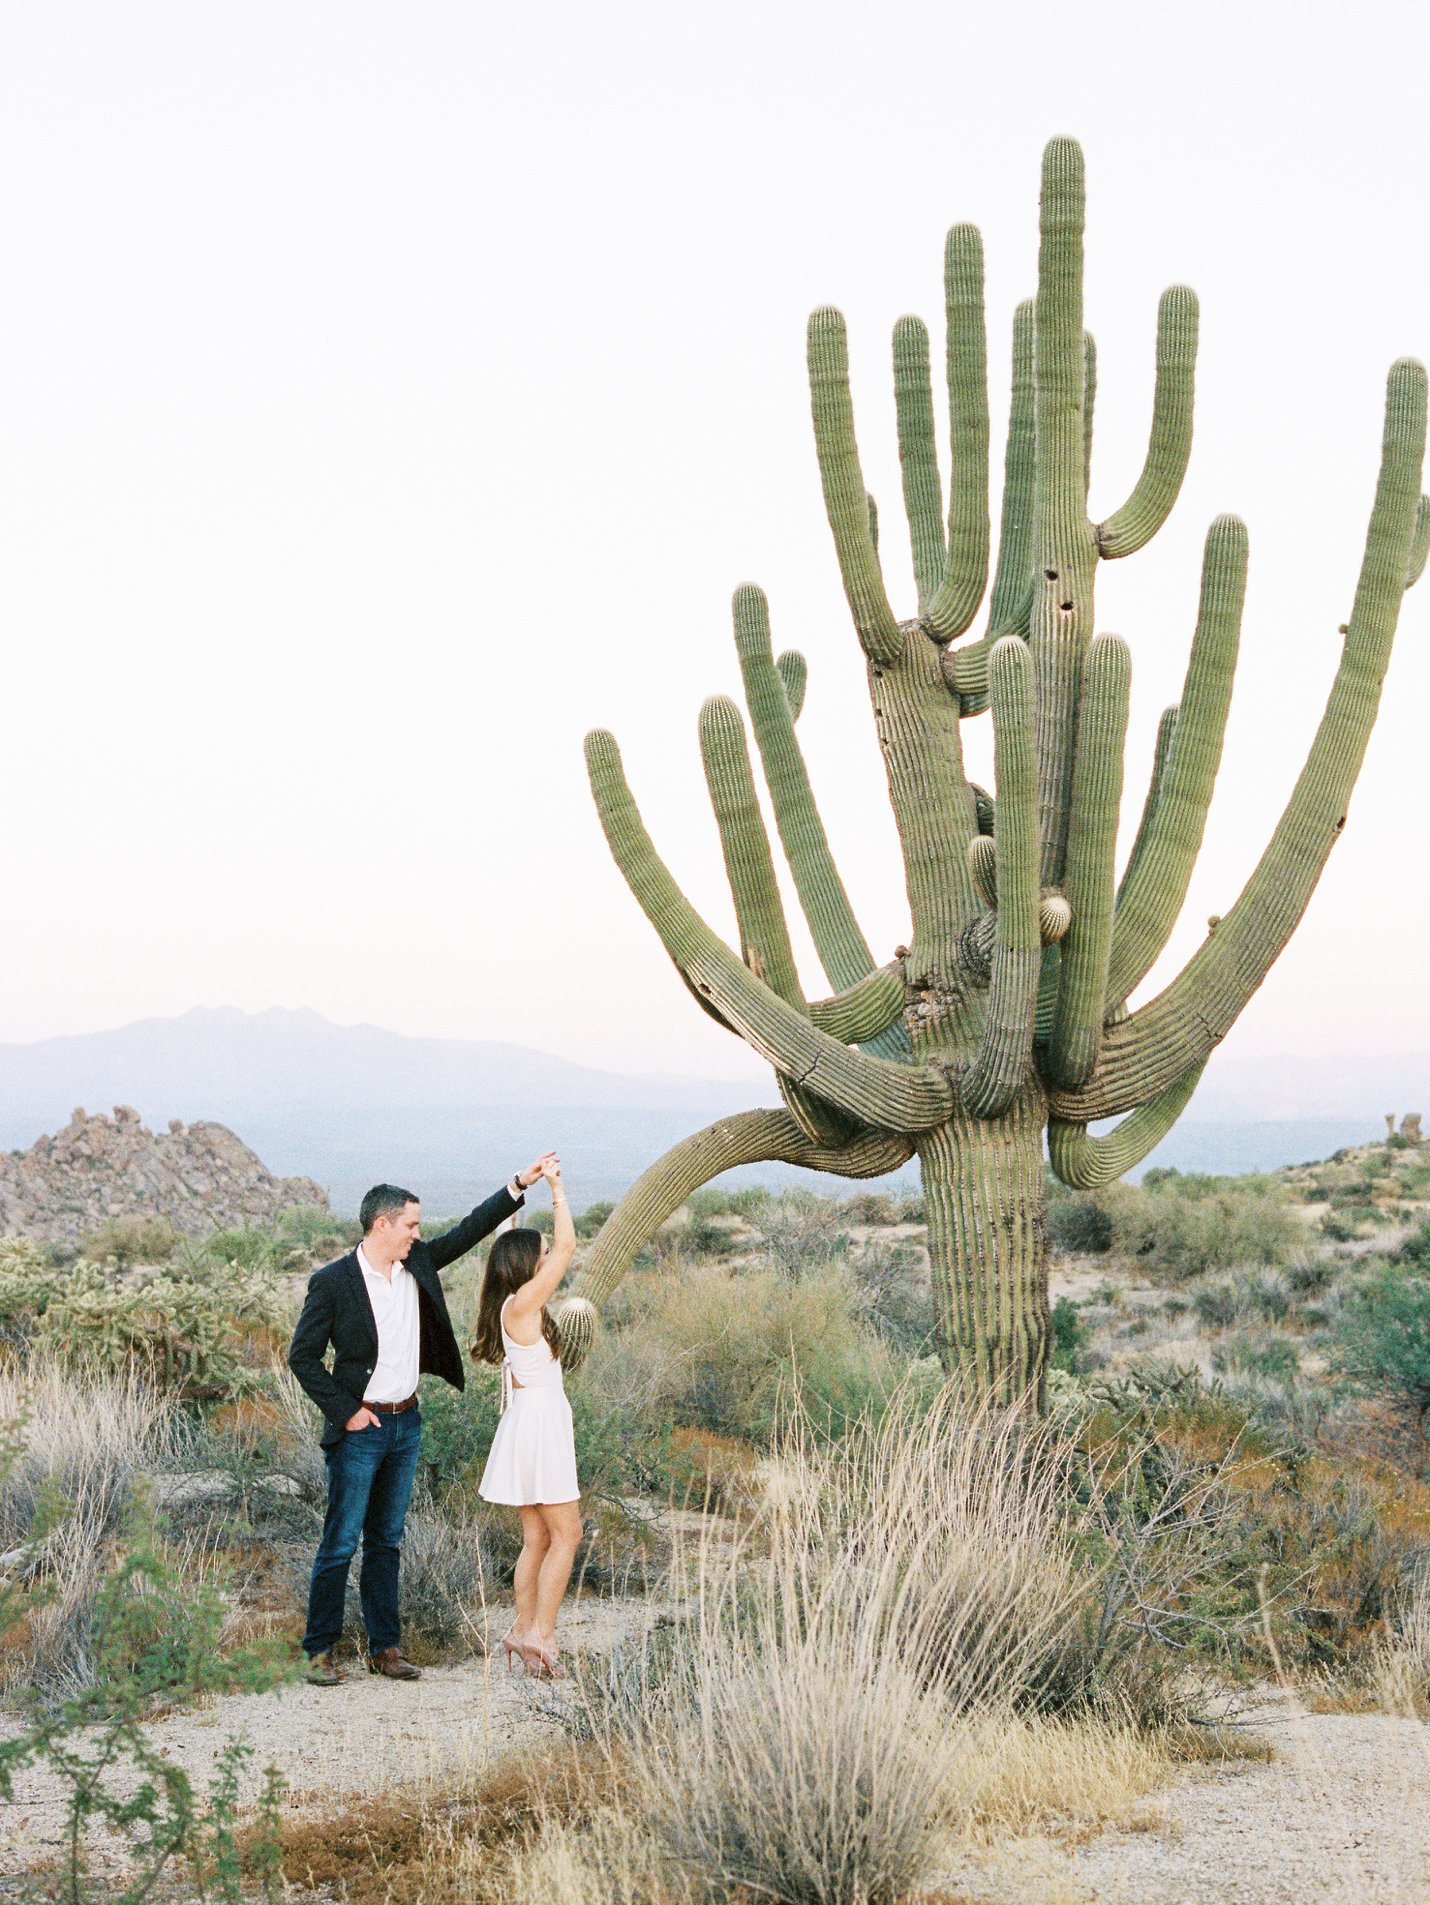 Arizona desert engagement photos - Rachel Solomon Photography